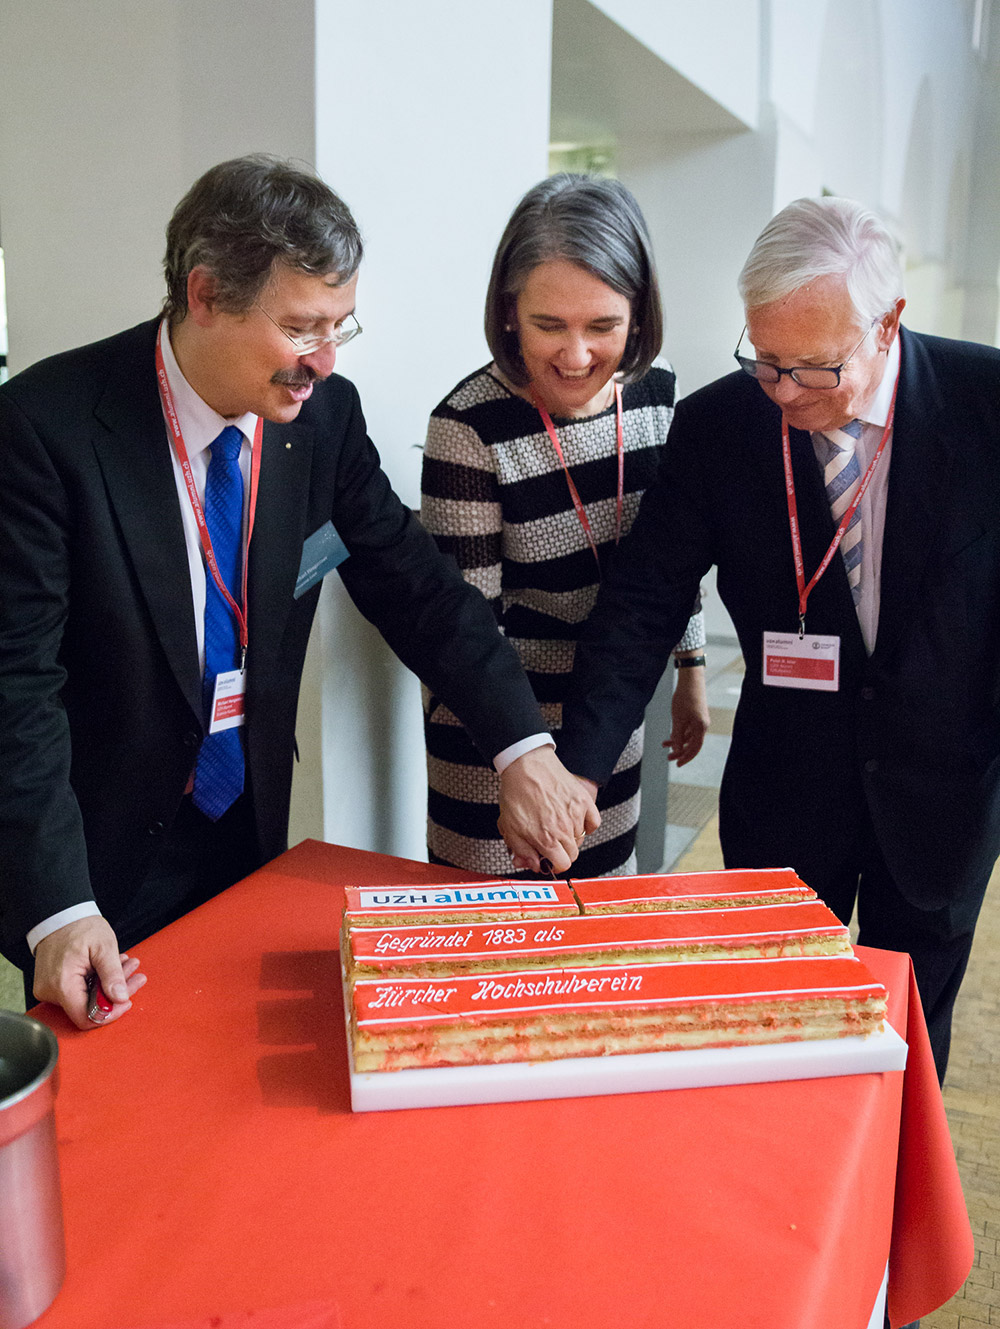 President Michael Hengartner and UZH Alumni co-presidents Denise Schmid and Peter Isler cutting the “birthday” cake.